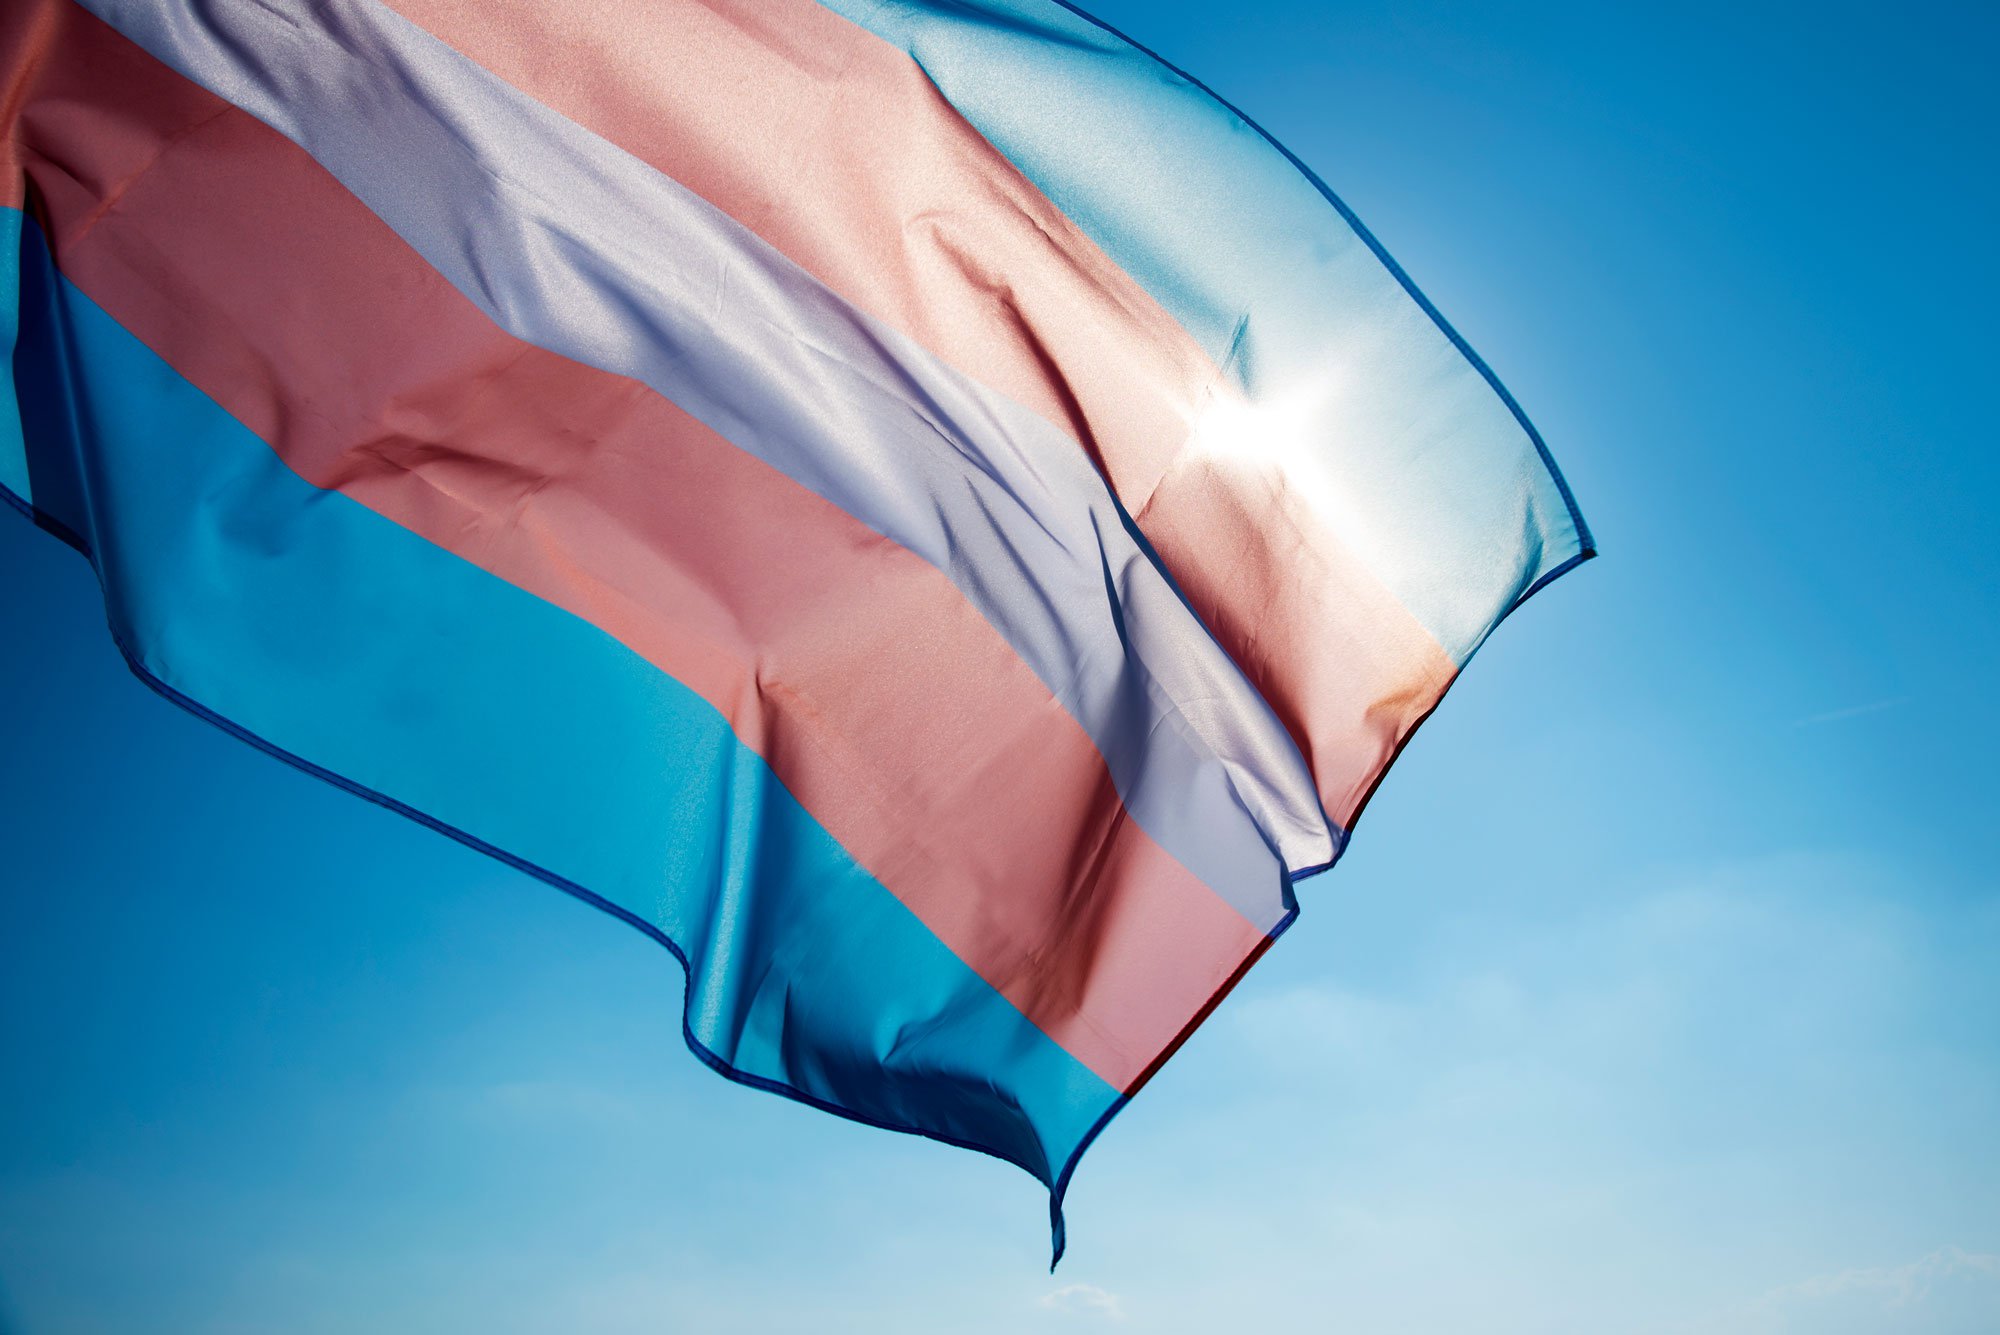 Transgender pride flag waving in the sky.